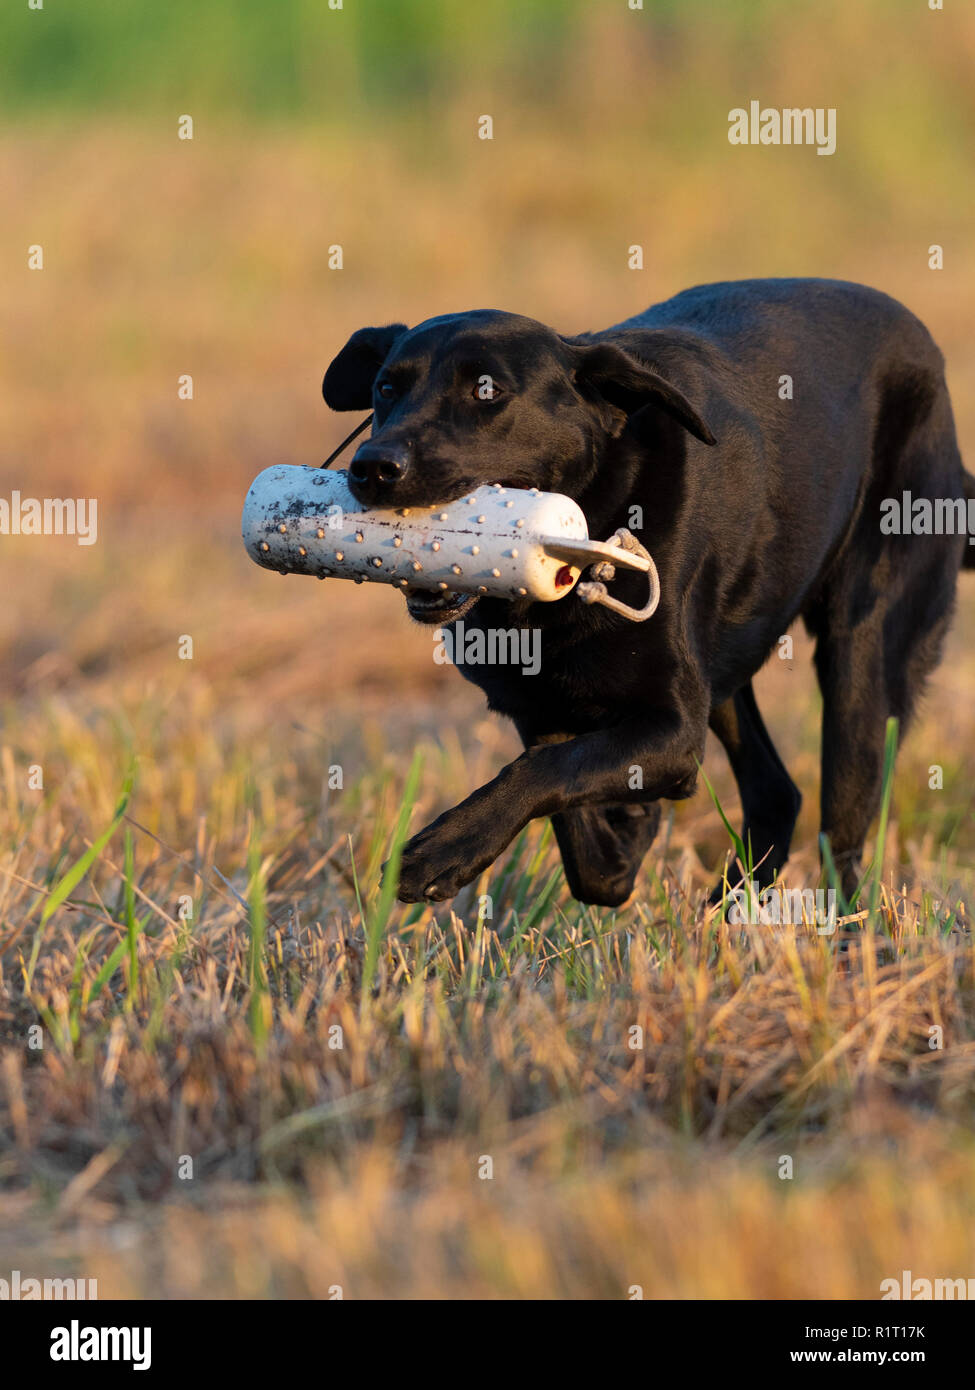 A Labrador Retriever out training for hunting season Stock Photo